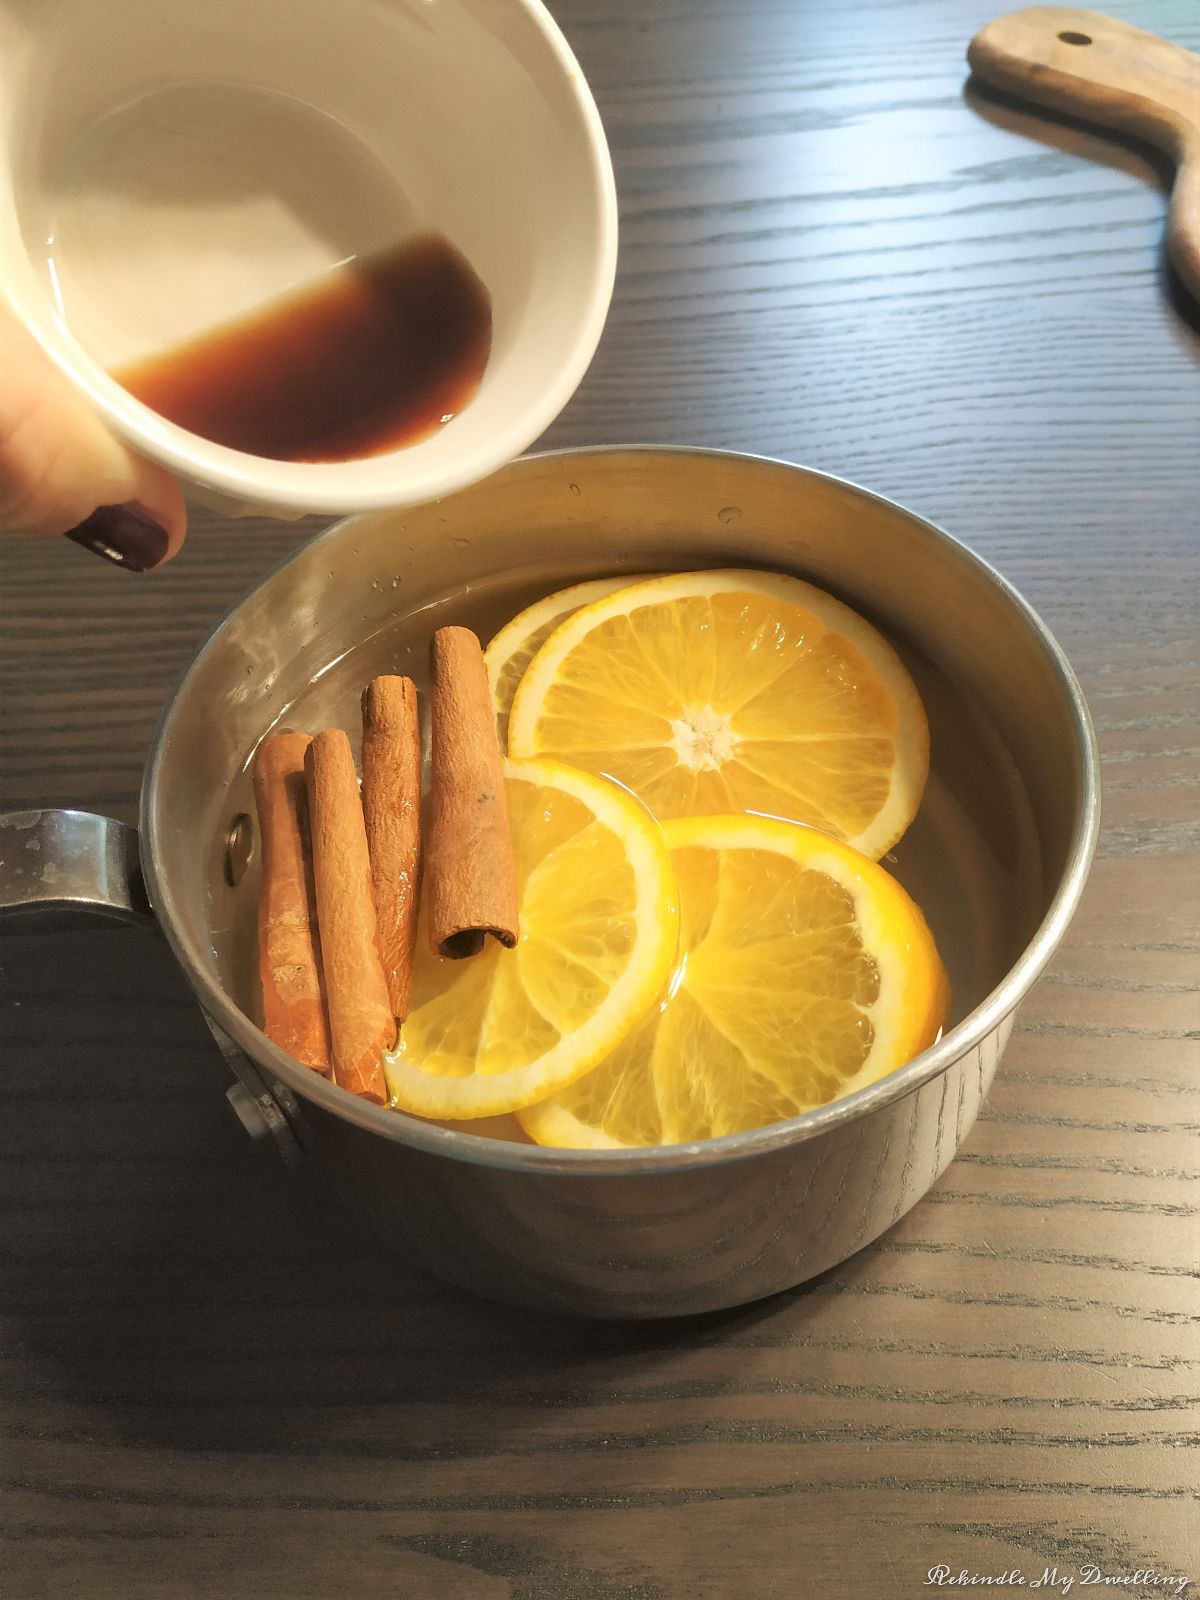 Adding vanilla extract into a pot water alongside orange slices and cinnamon sticks.